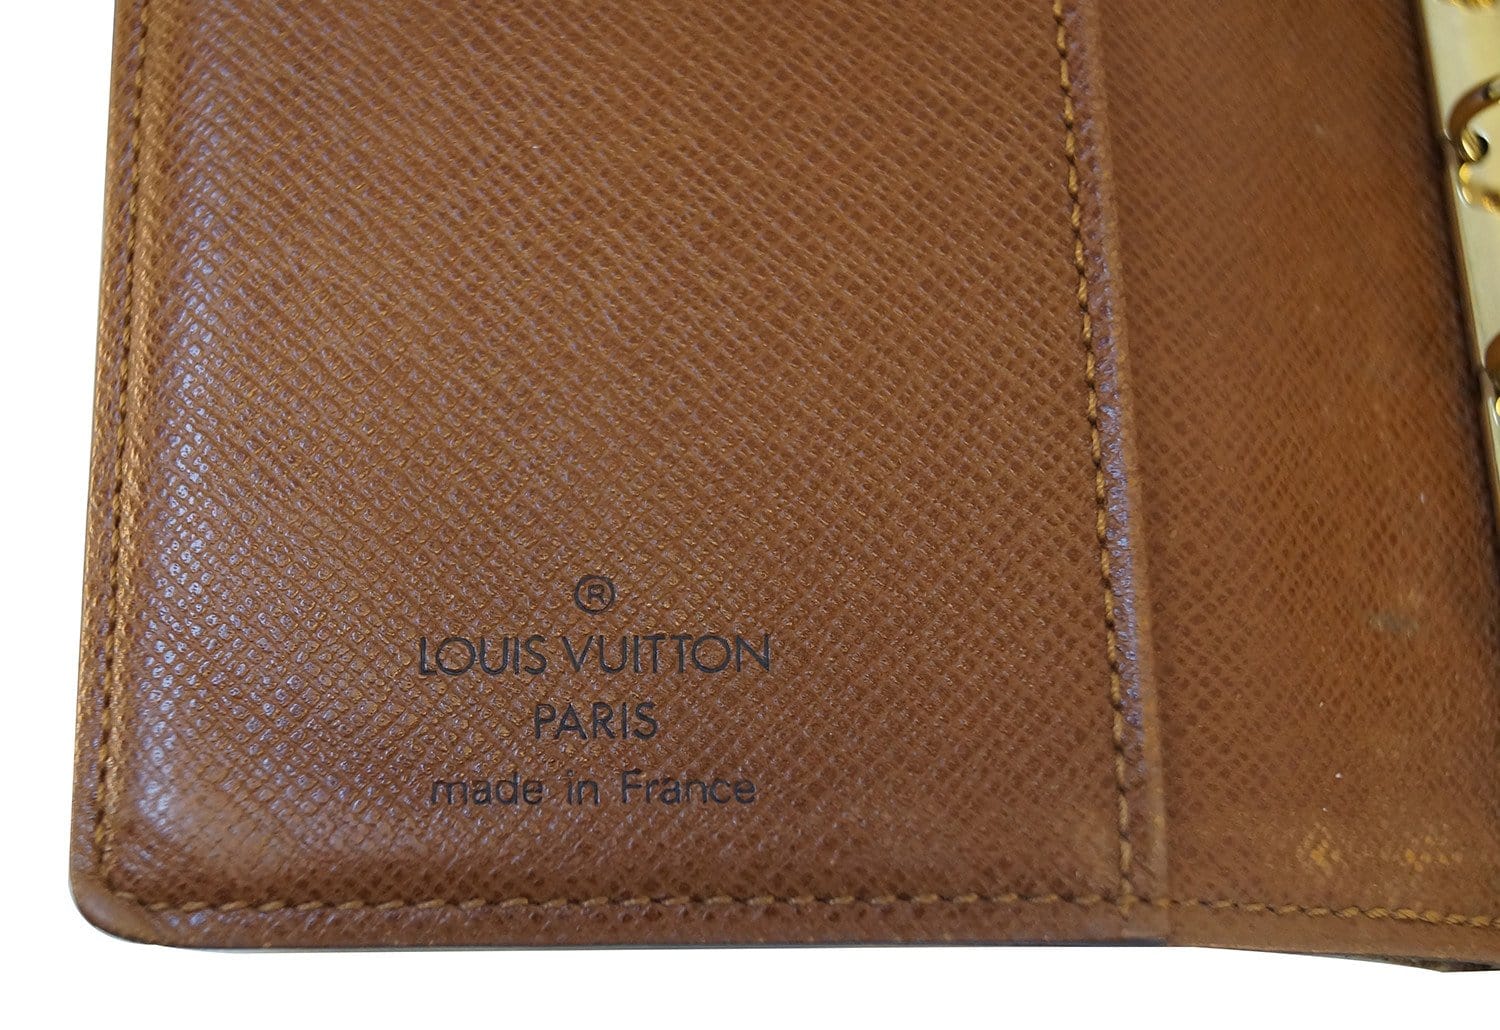 Authentic Louis Vuitton Monogram Agenda PM Day Planner Cover